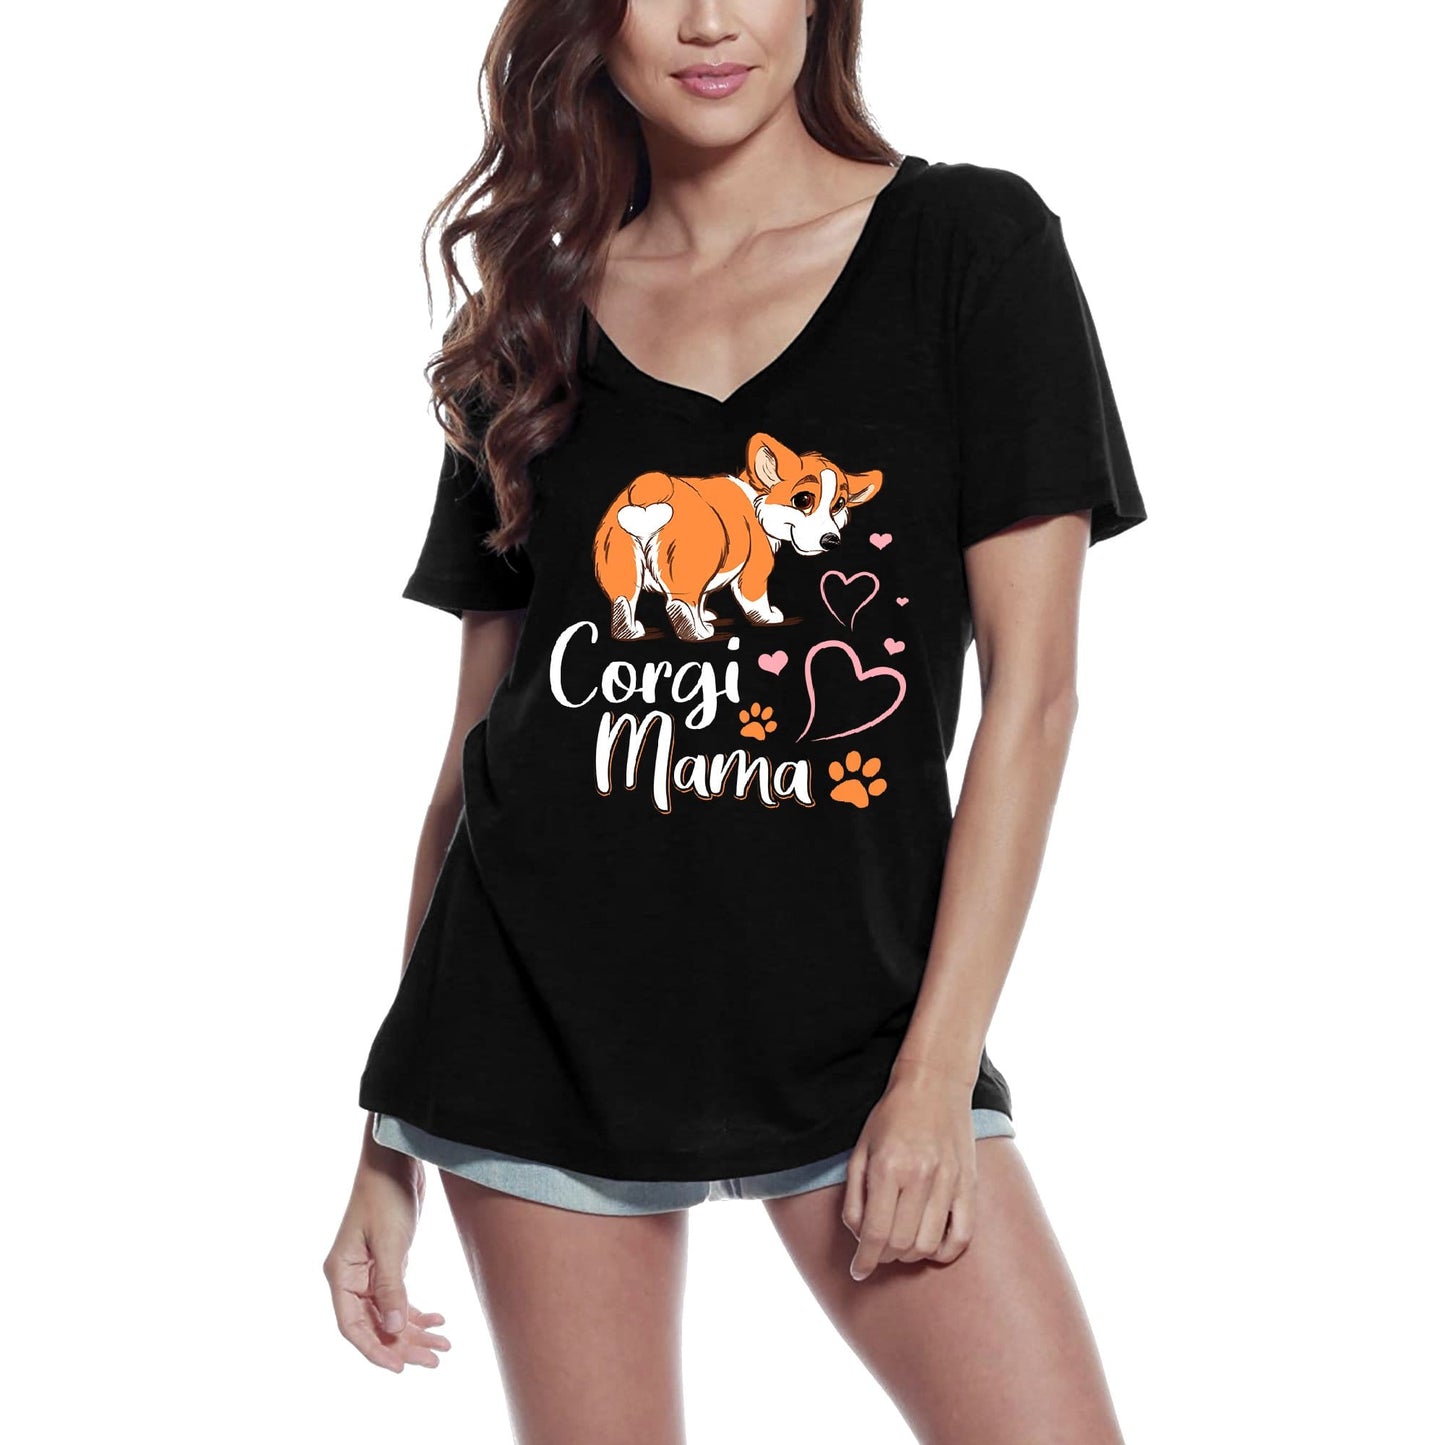 ULTRABASIC Women's Graphic T-Shirt Corgi Mama - Gift For Pet Lovers - Cute Dog Paws